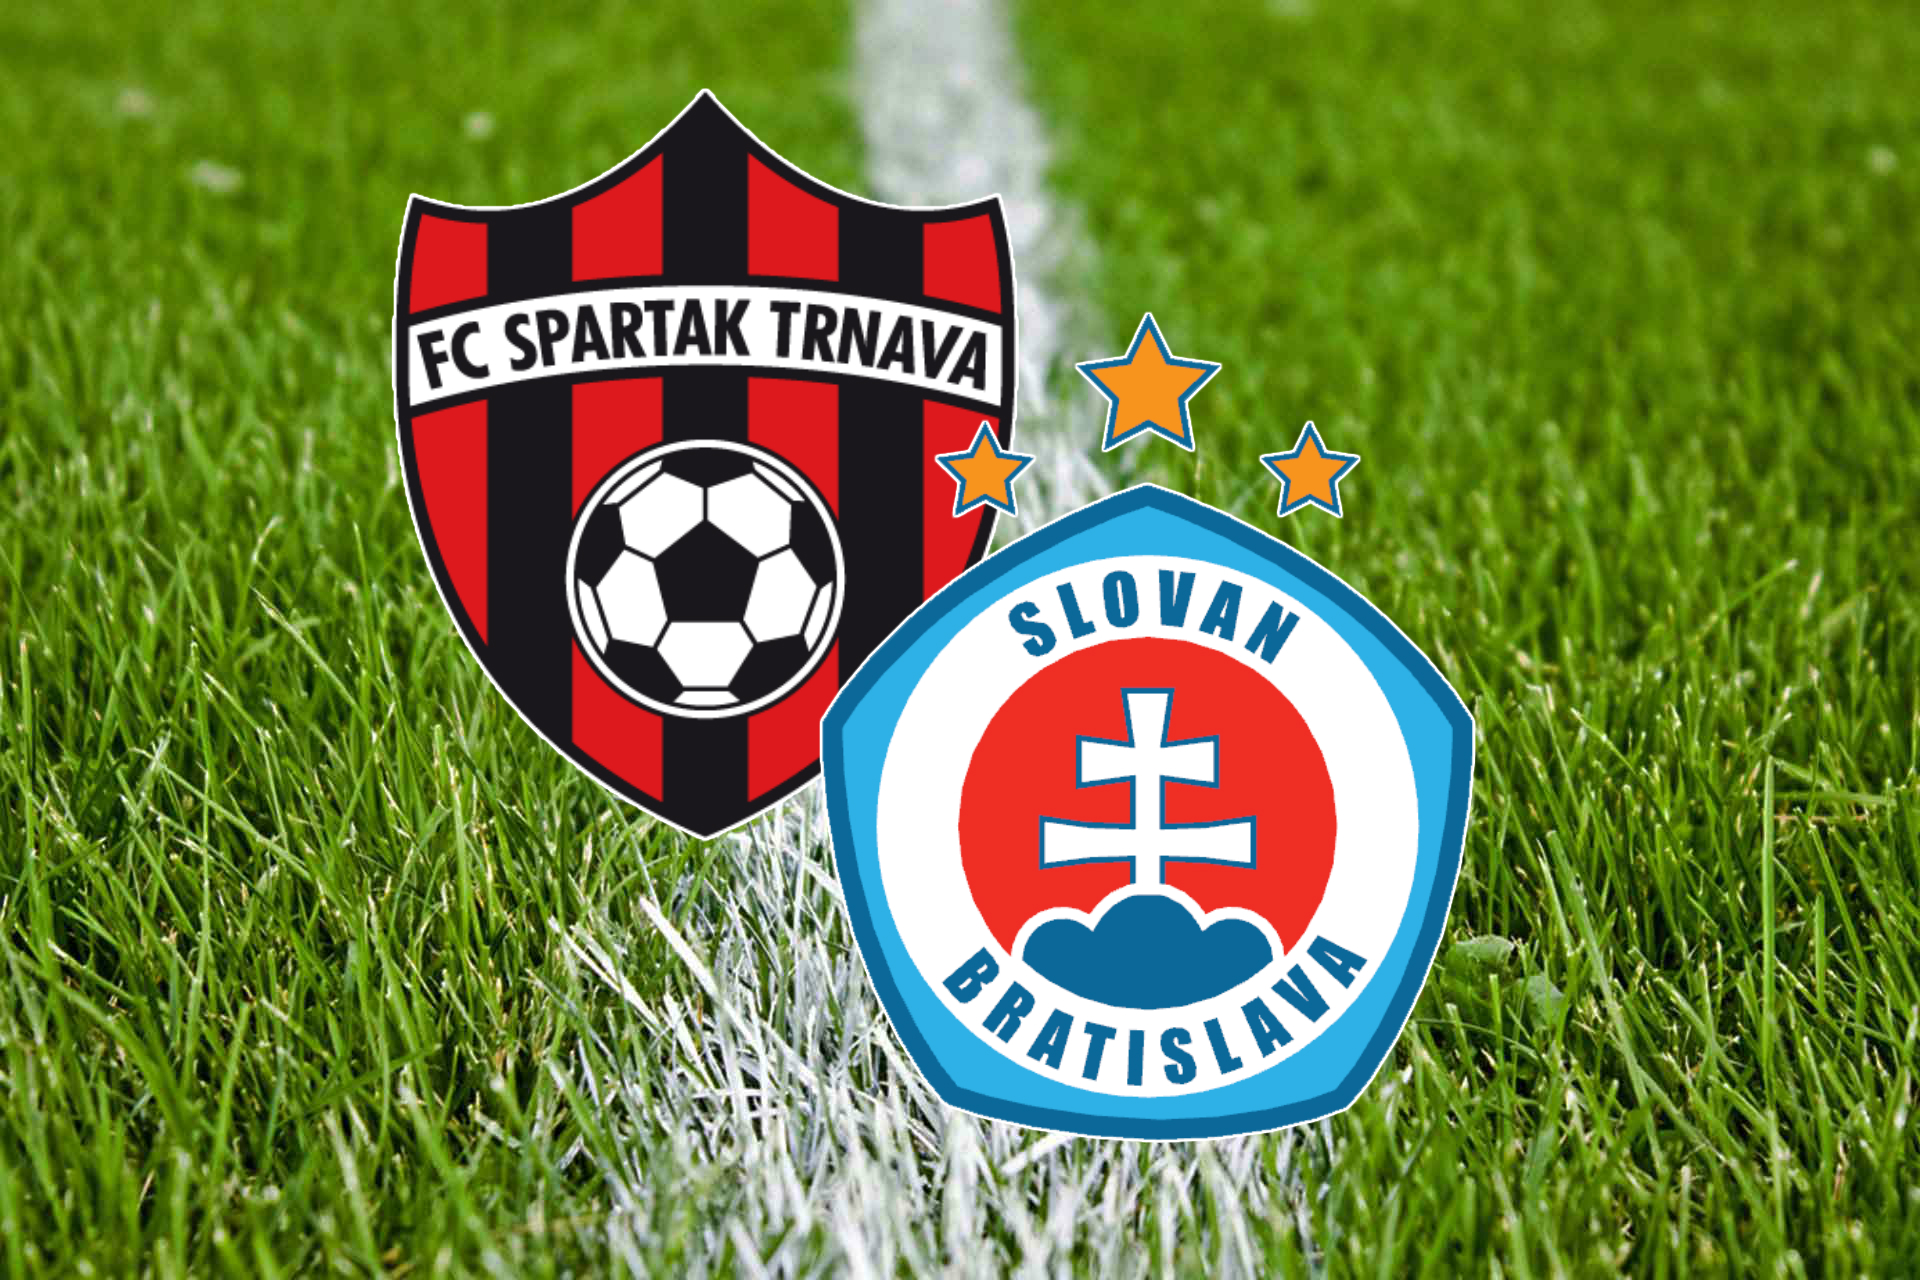 FC Spartak Trnava - ŠK Slovan Bratislava